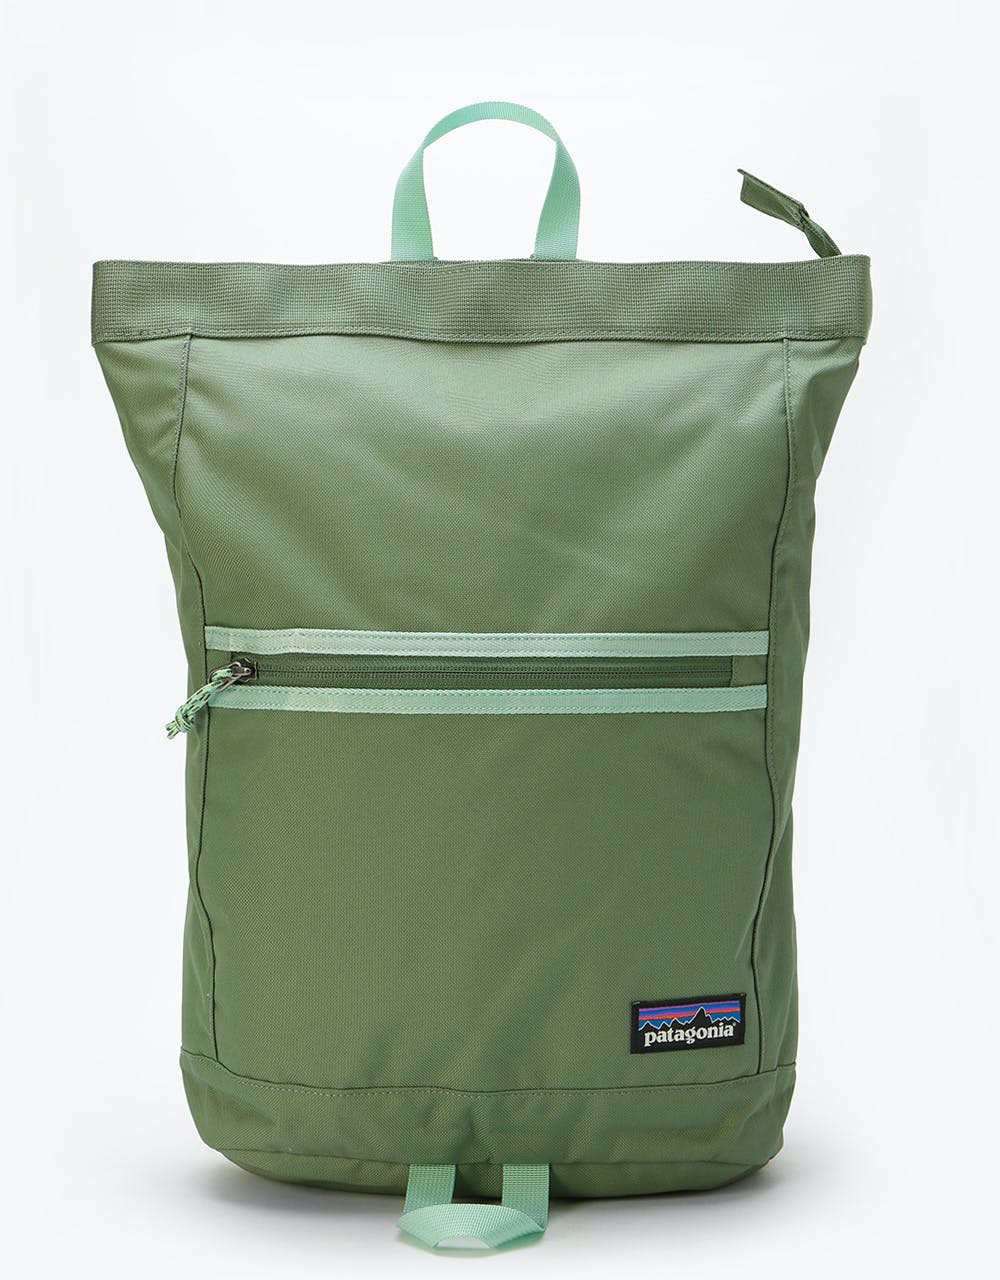 Patagonia Arbor Market Pack 15L Backpack - Camp Green